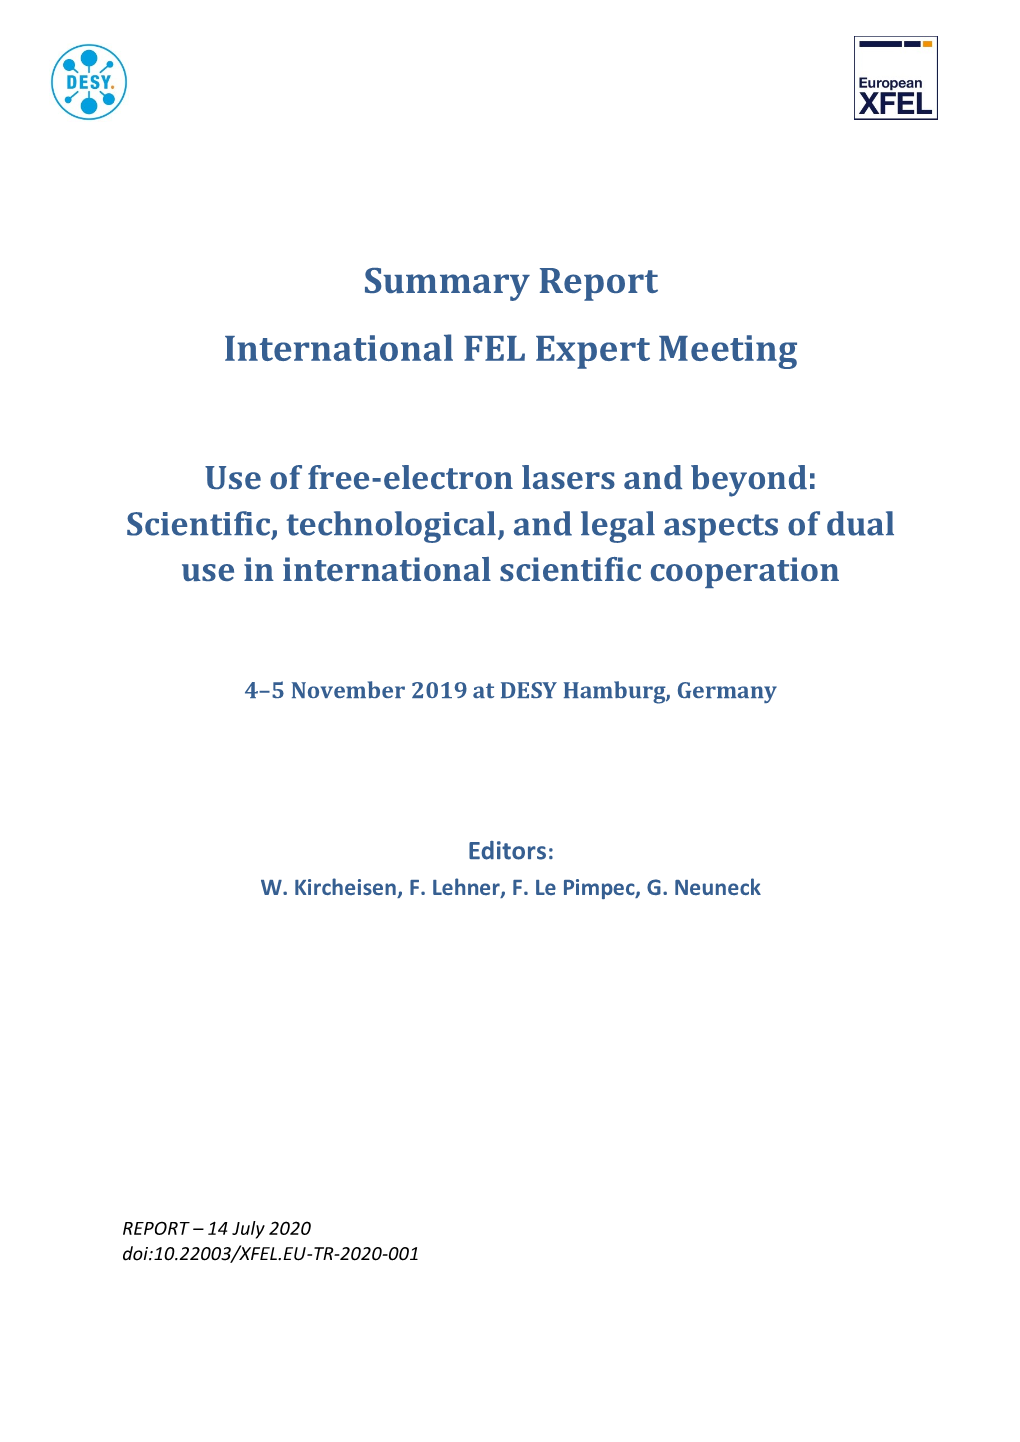 Summary Report – International FEL Expert Meeting